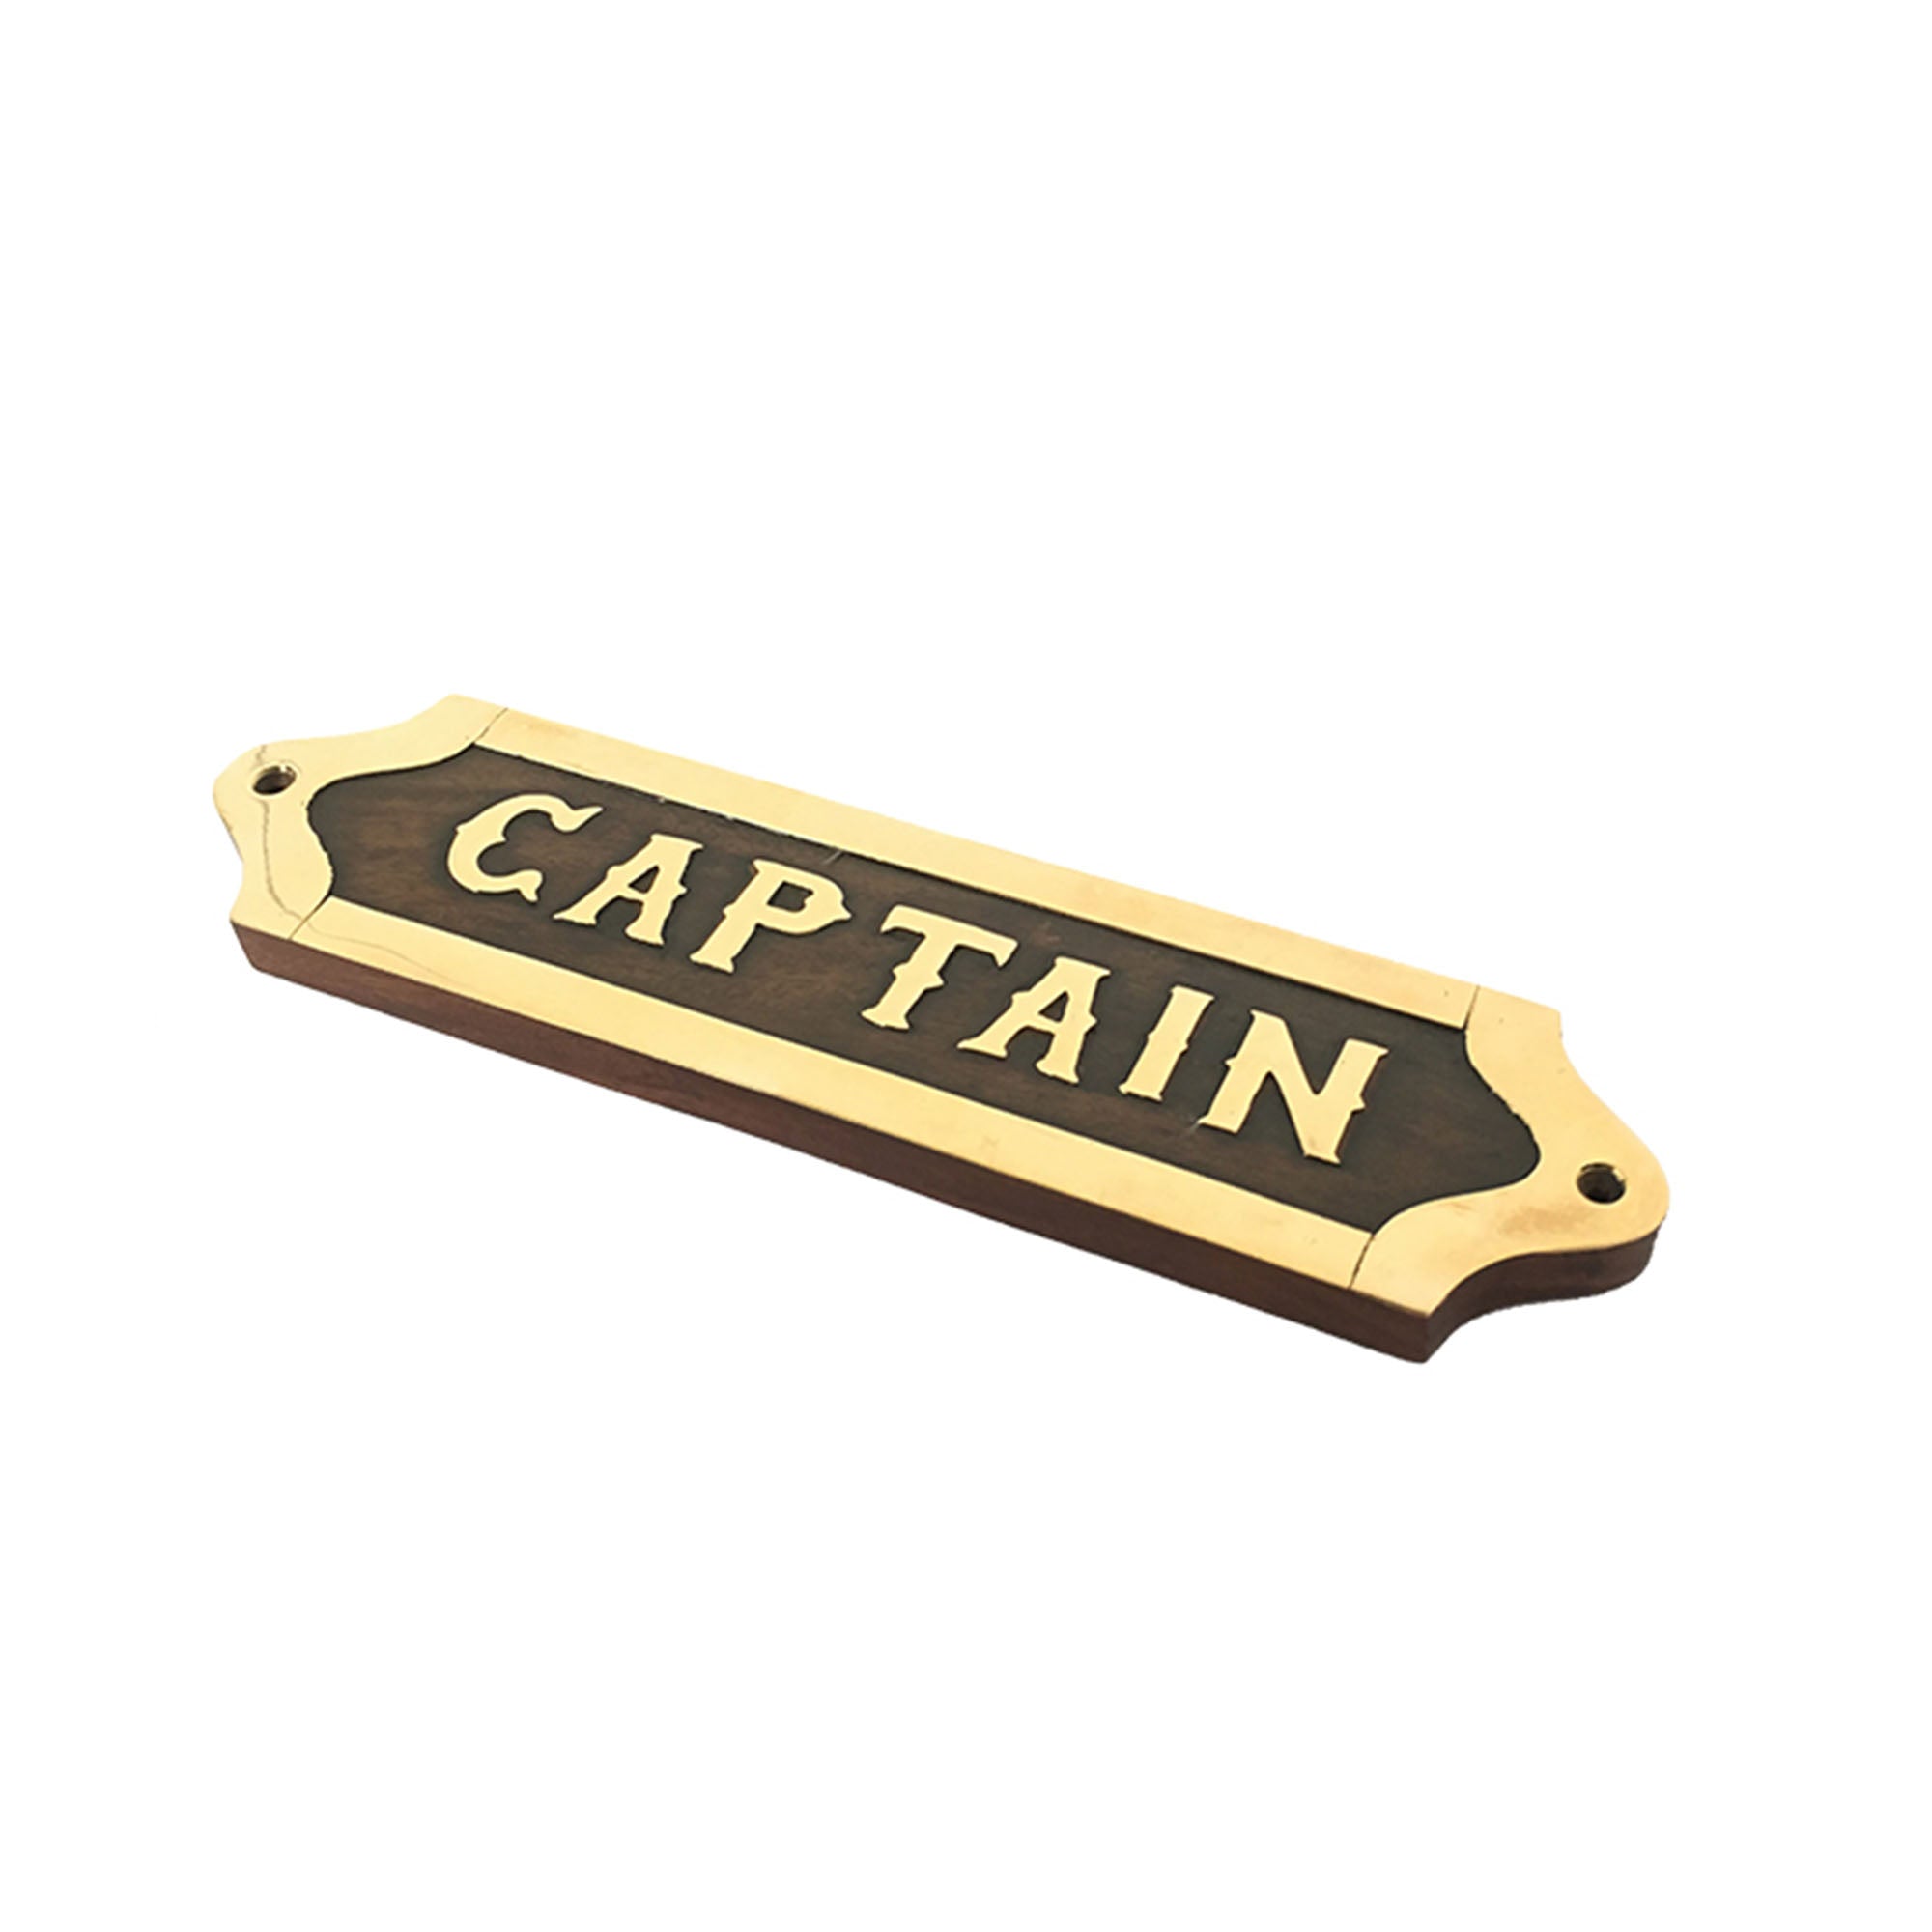 Wood & Brass Plaque - Captain - Notbrand